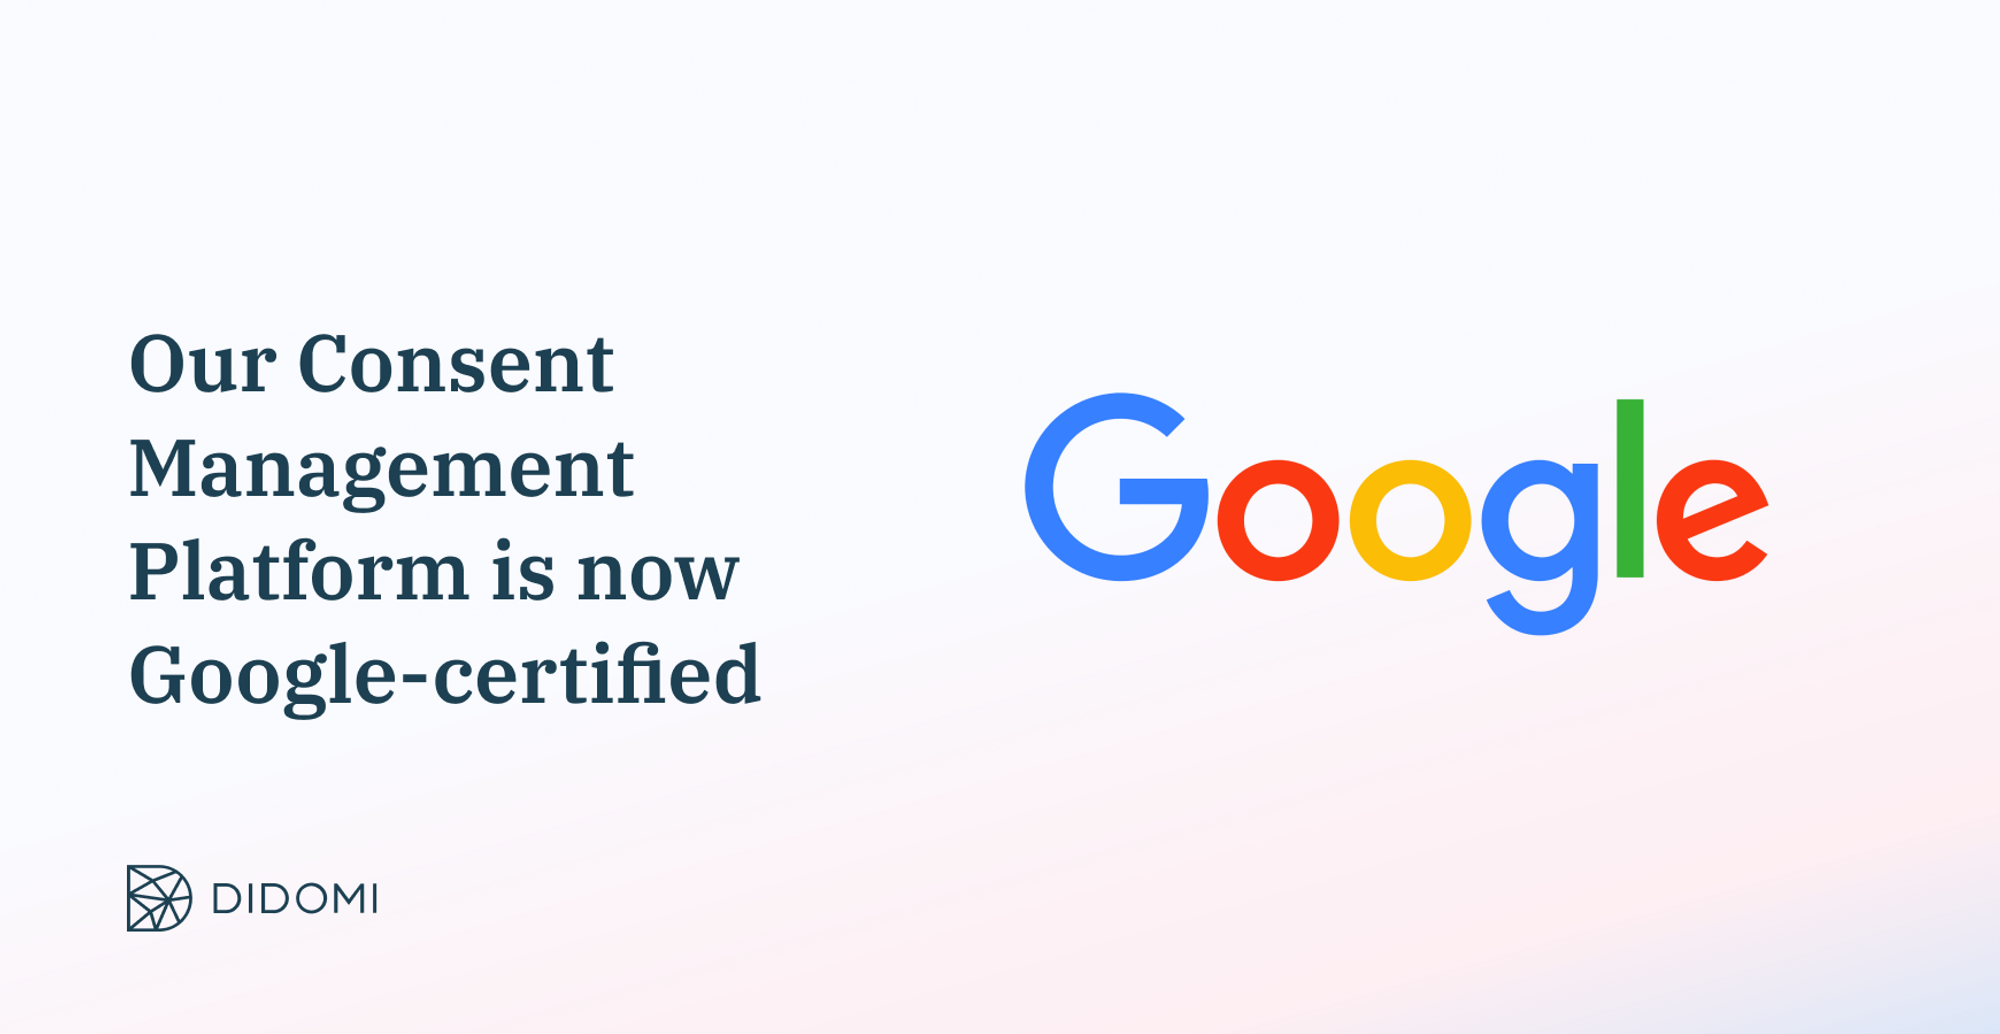 Our Consent Management Platform (CMP) is now Google-certified